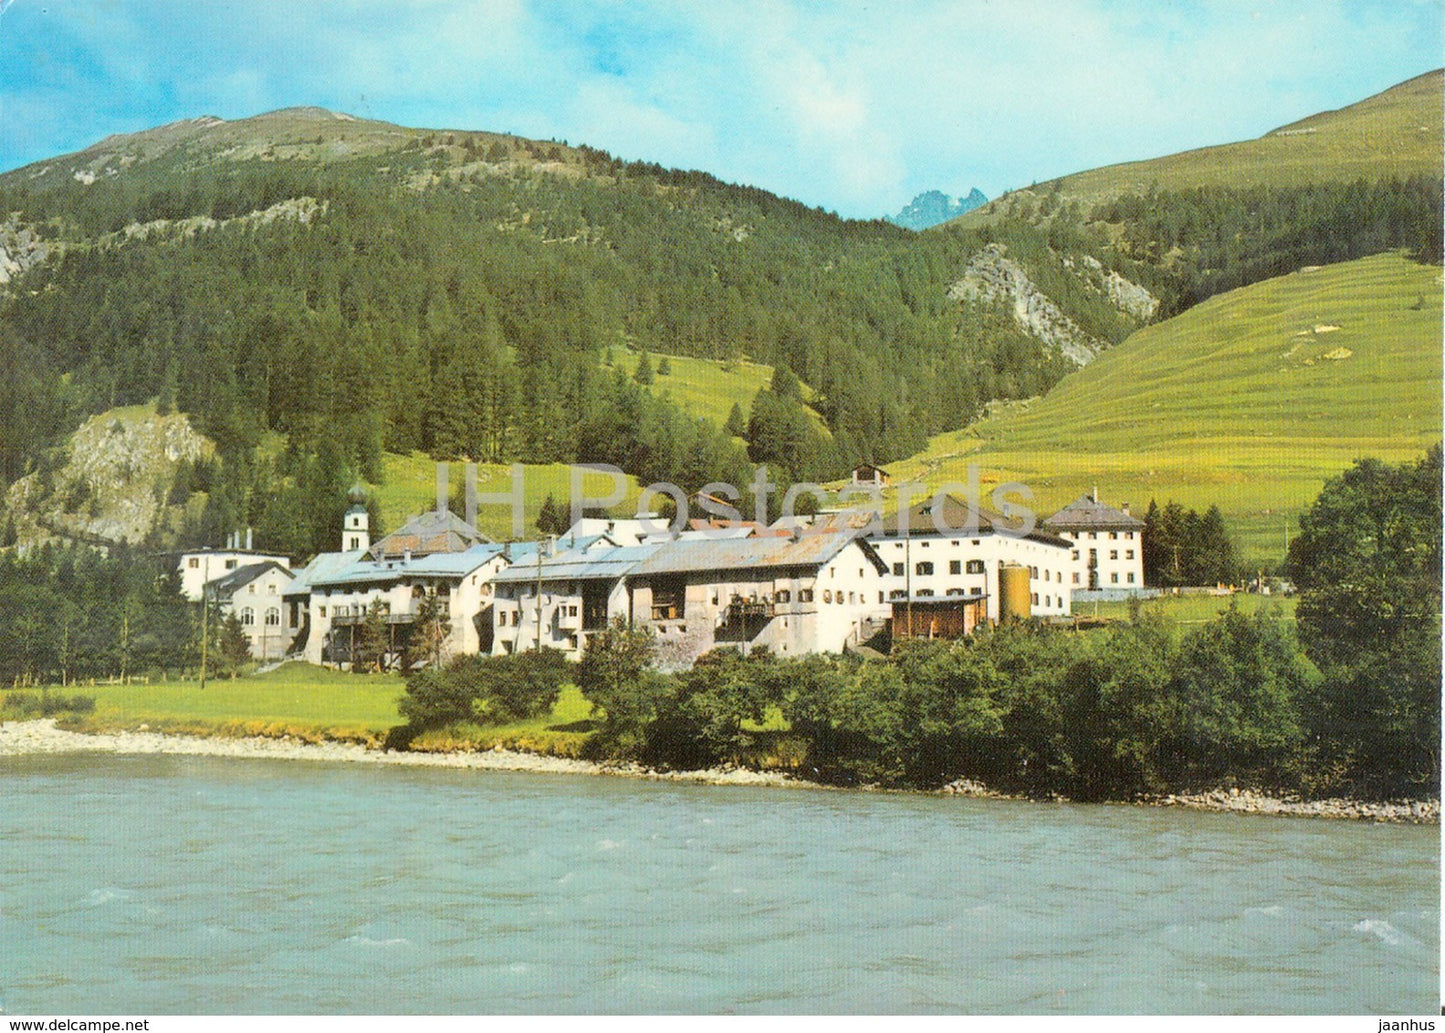 Madulain im Oberengadin 1700 m - Switzerland - used - JH Postcards